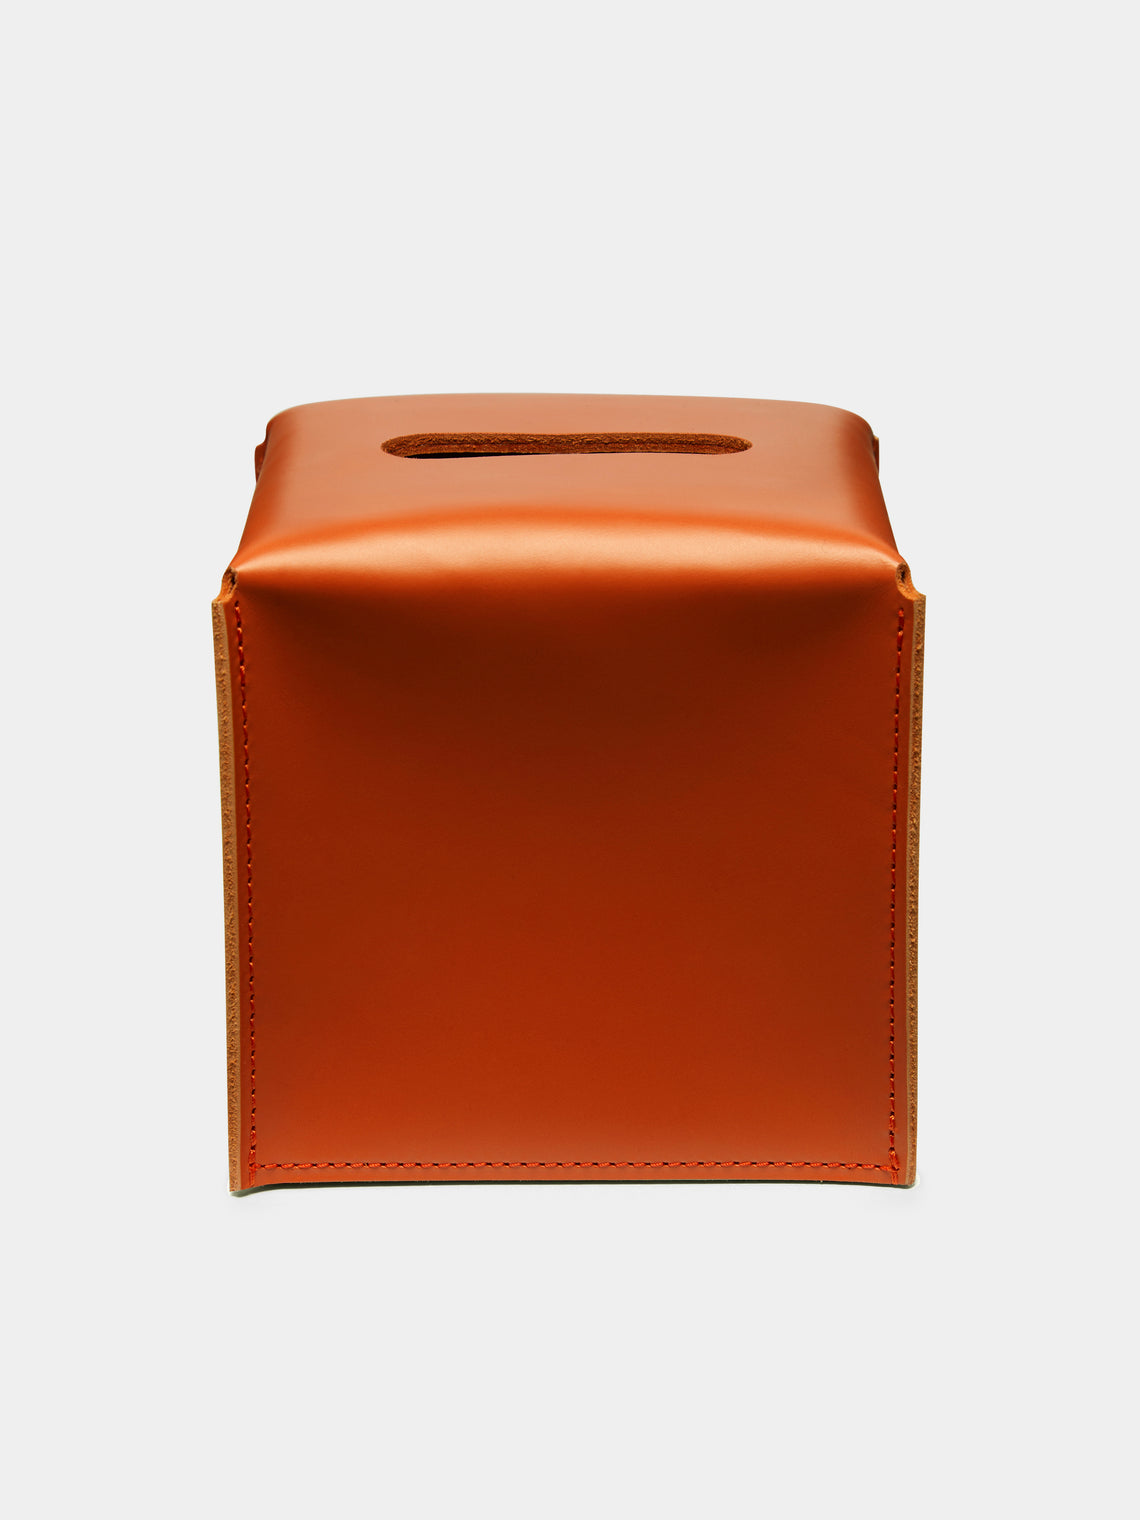 Rabitti 1969 - Amsterdam Leather Tissue Box - Orange - ABASK - 